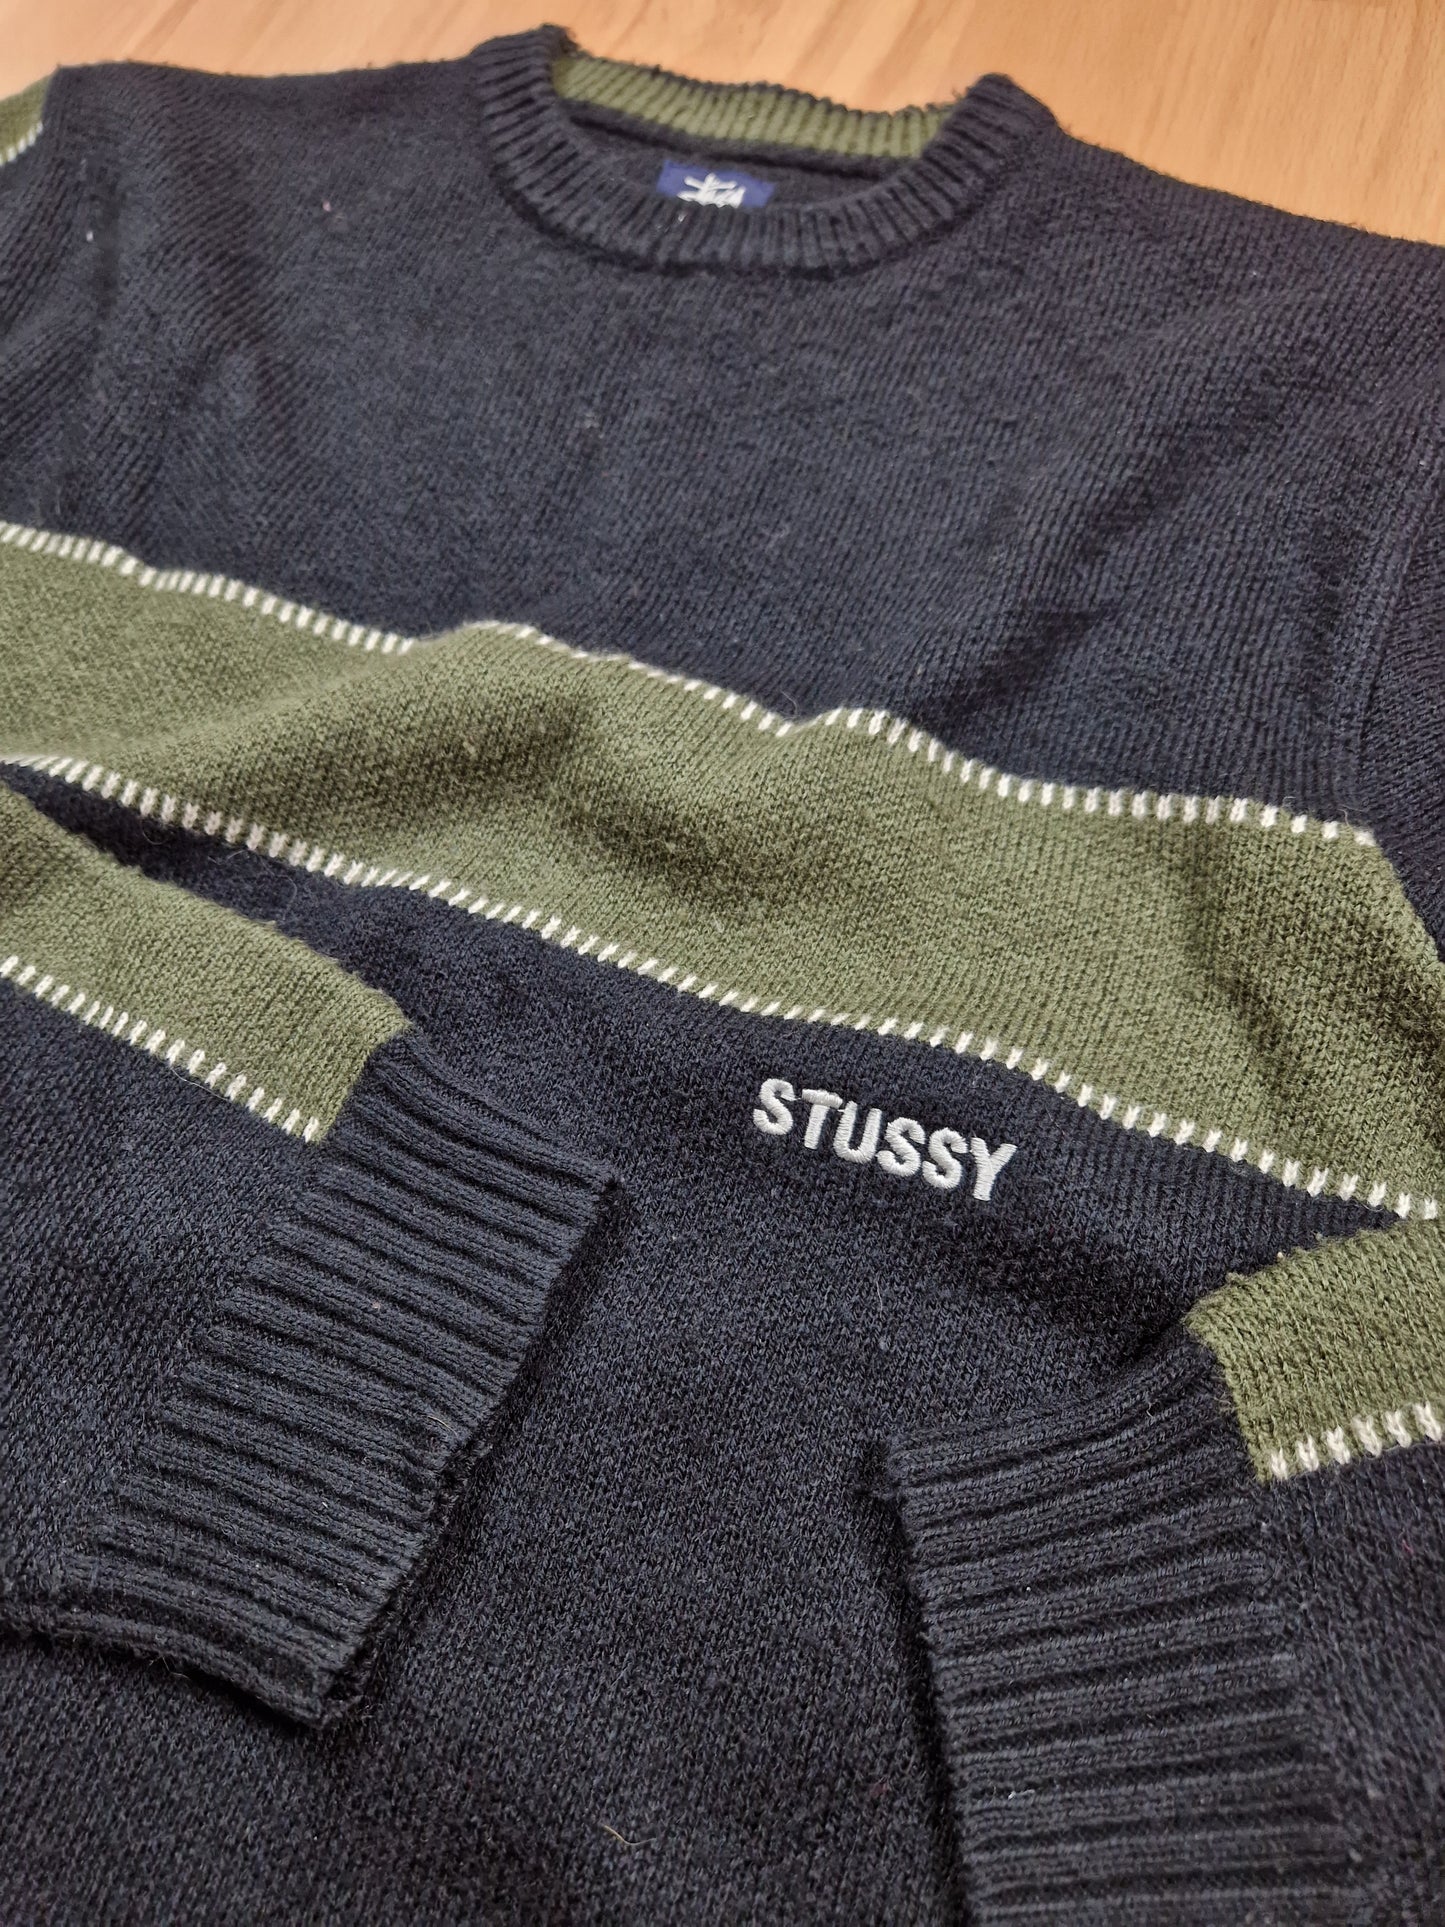 RARE Vintage Stussy Knit Sweater (M)